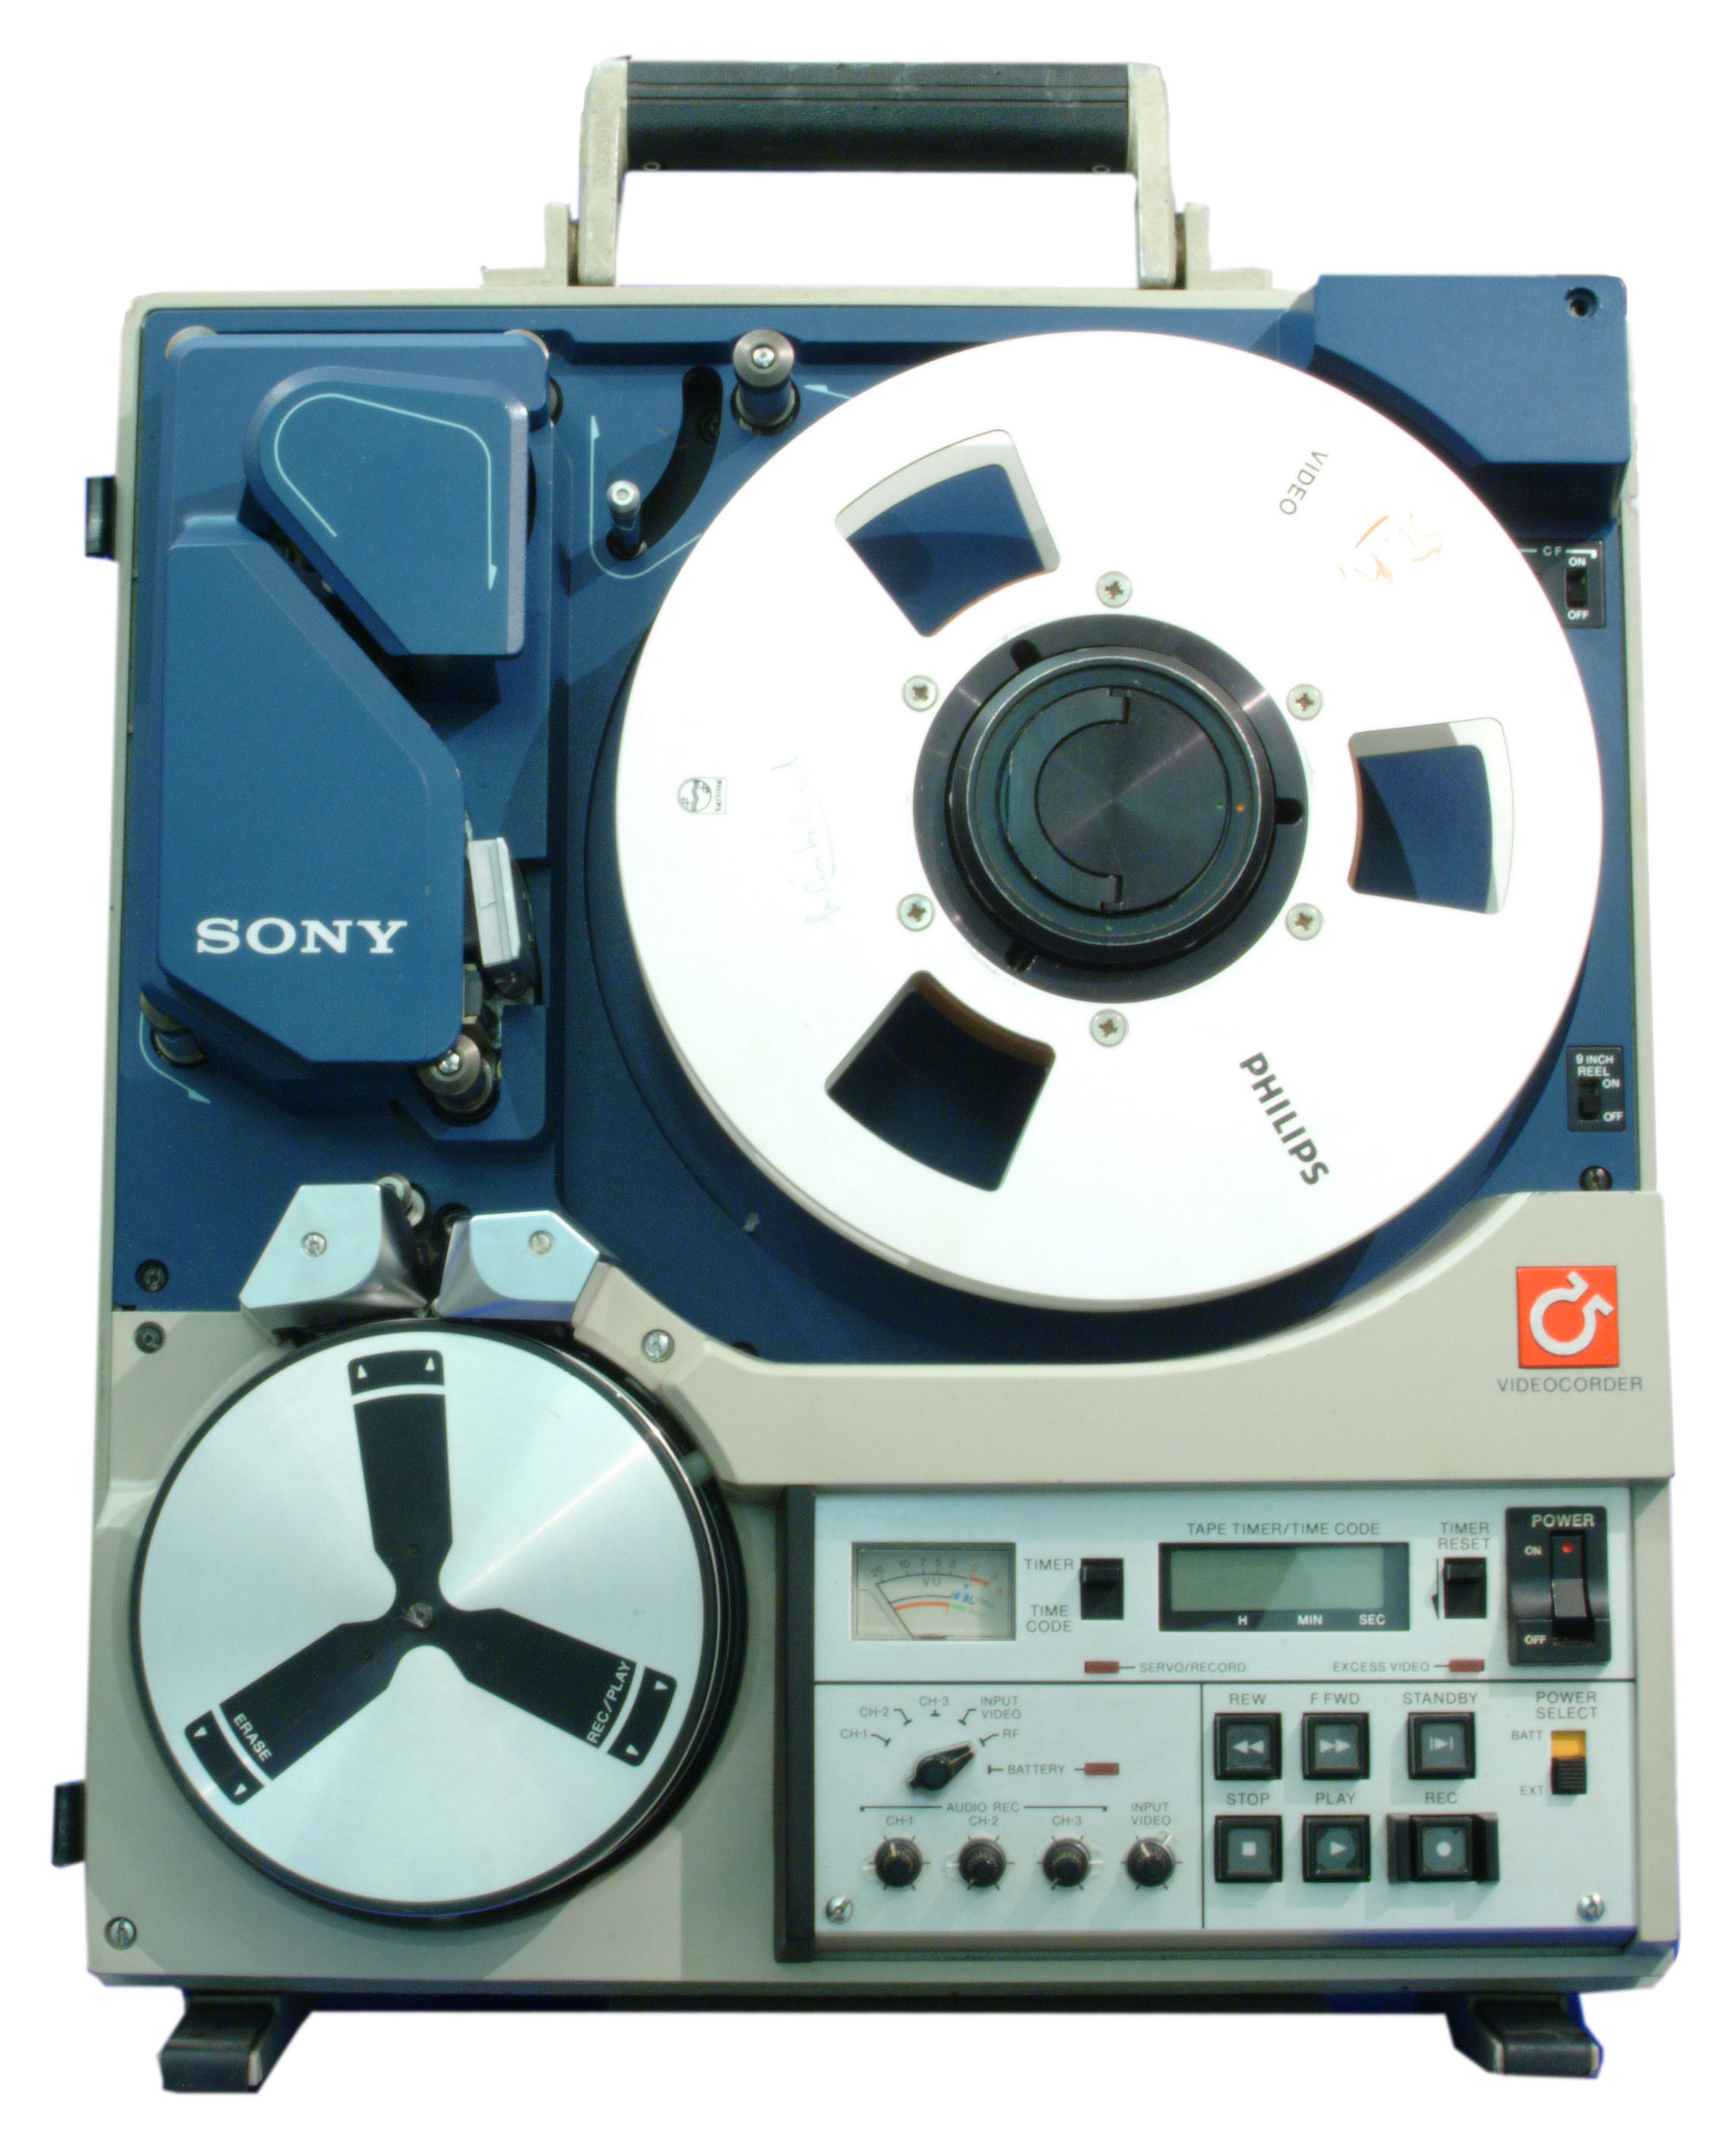 Transfer 1 Videotape to Digital